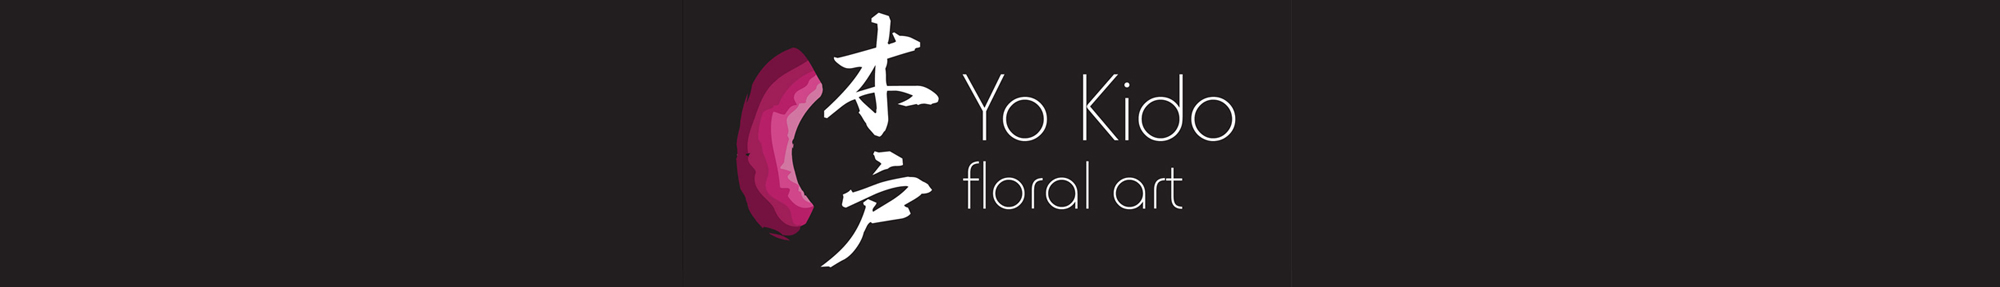 Logotipo Yokido Floral Art